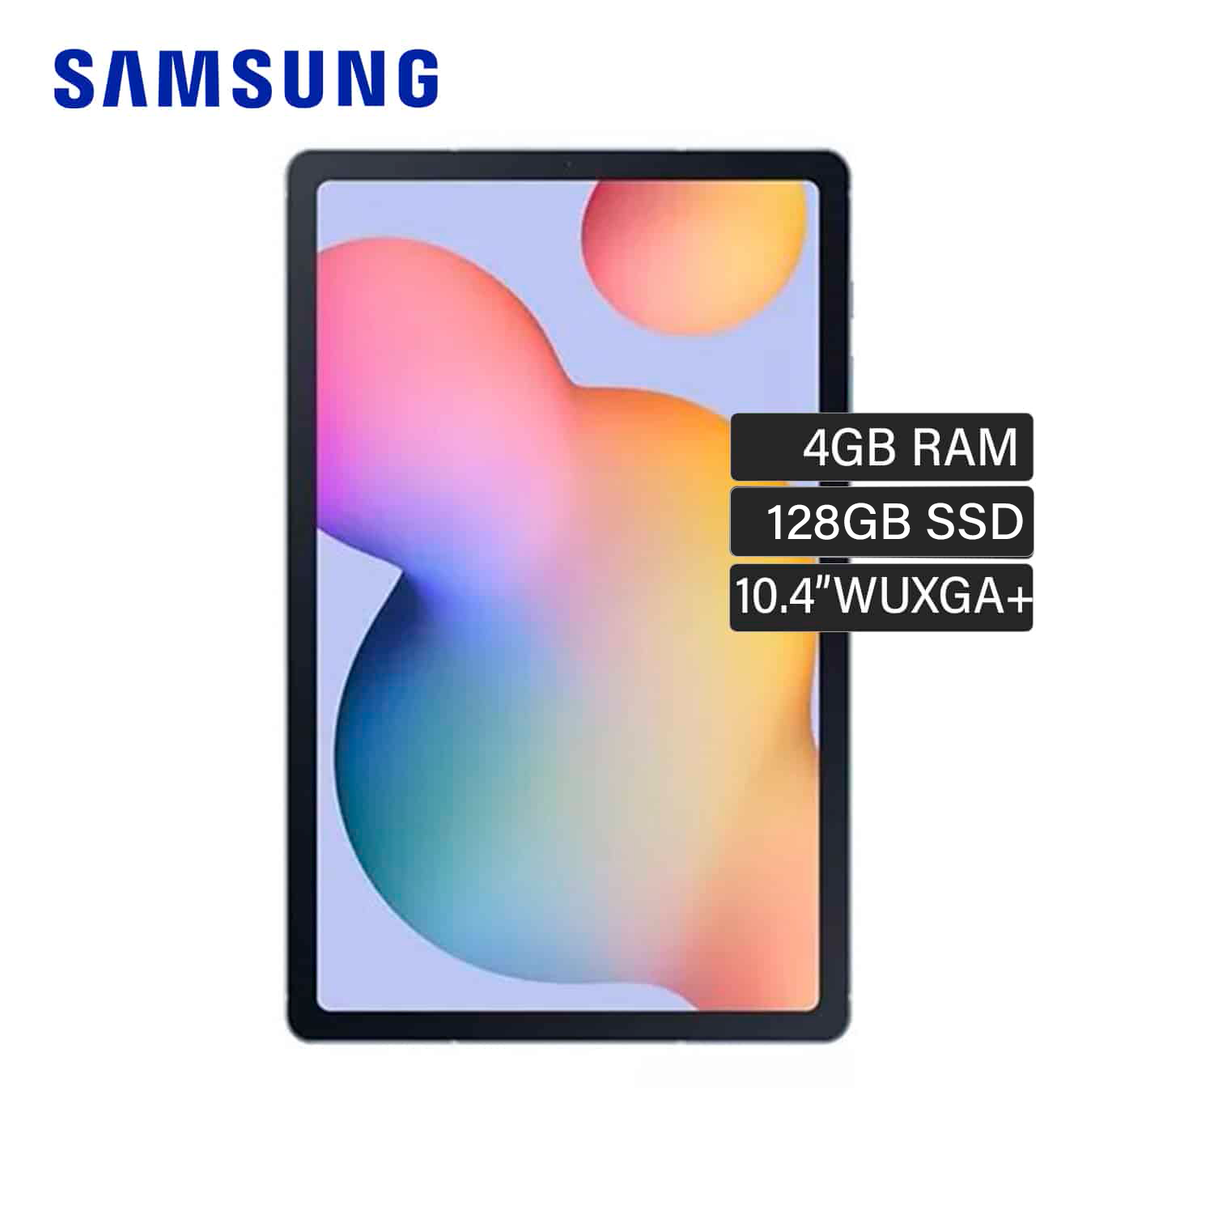  SAMSUNG Galaxy Tab S6 Lite - Tablet Android de 10.4